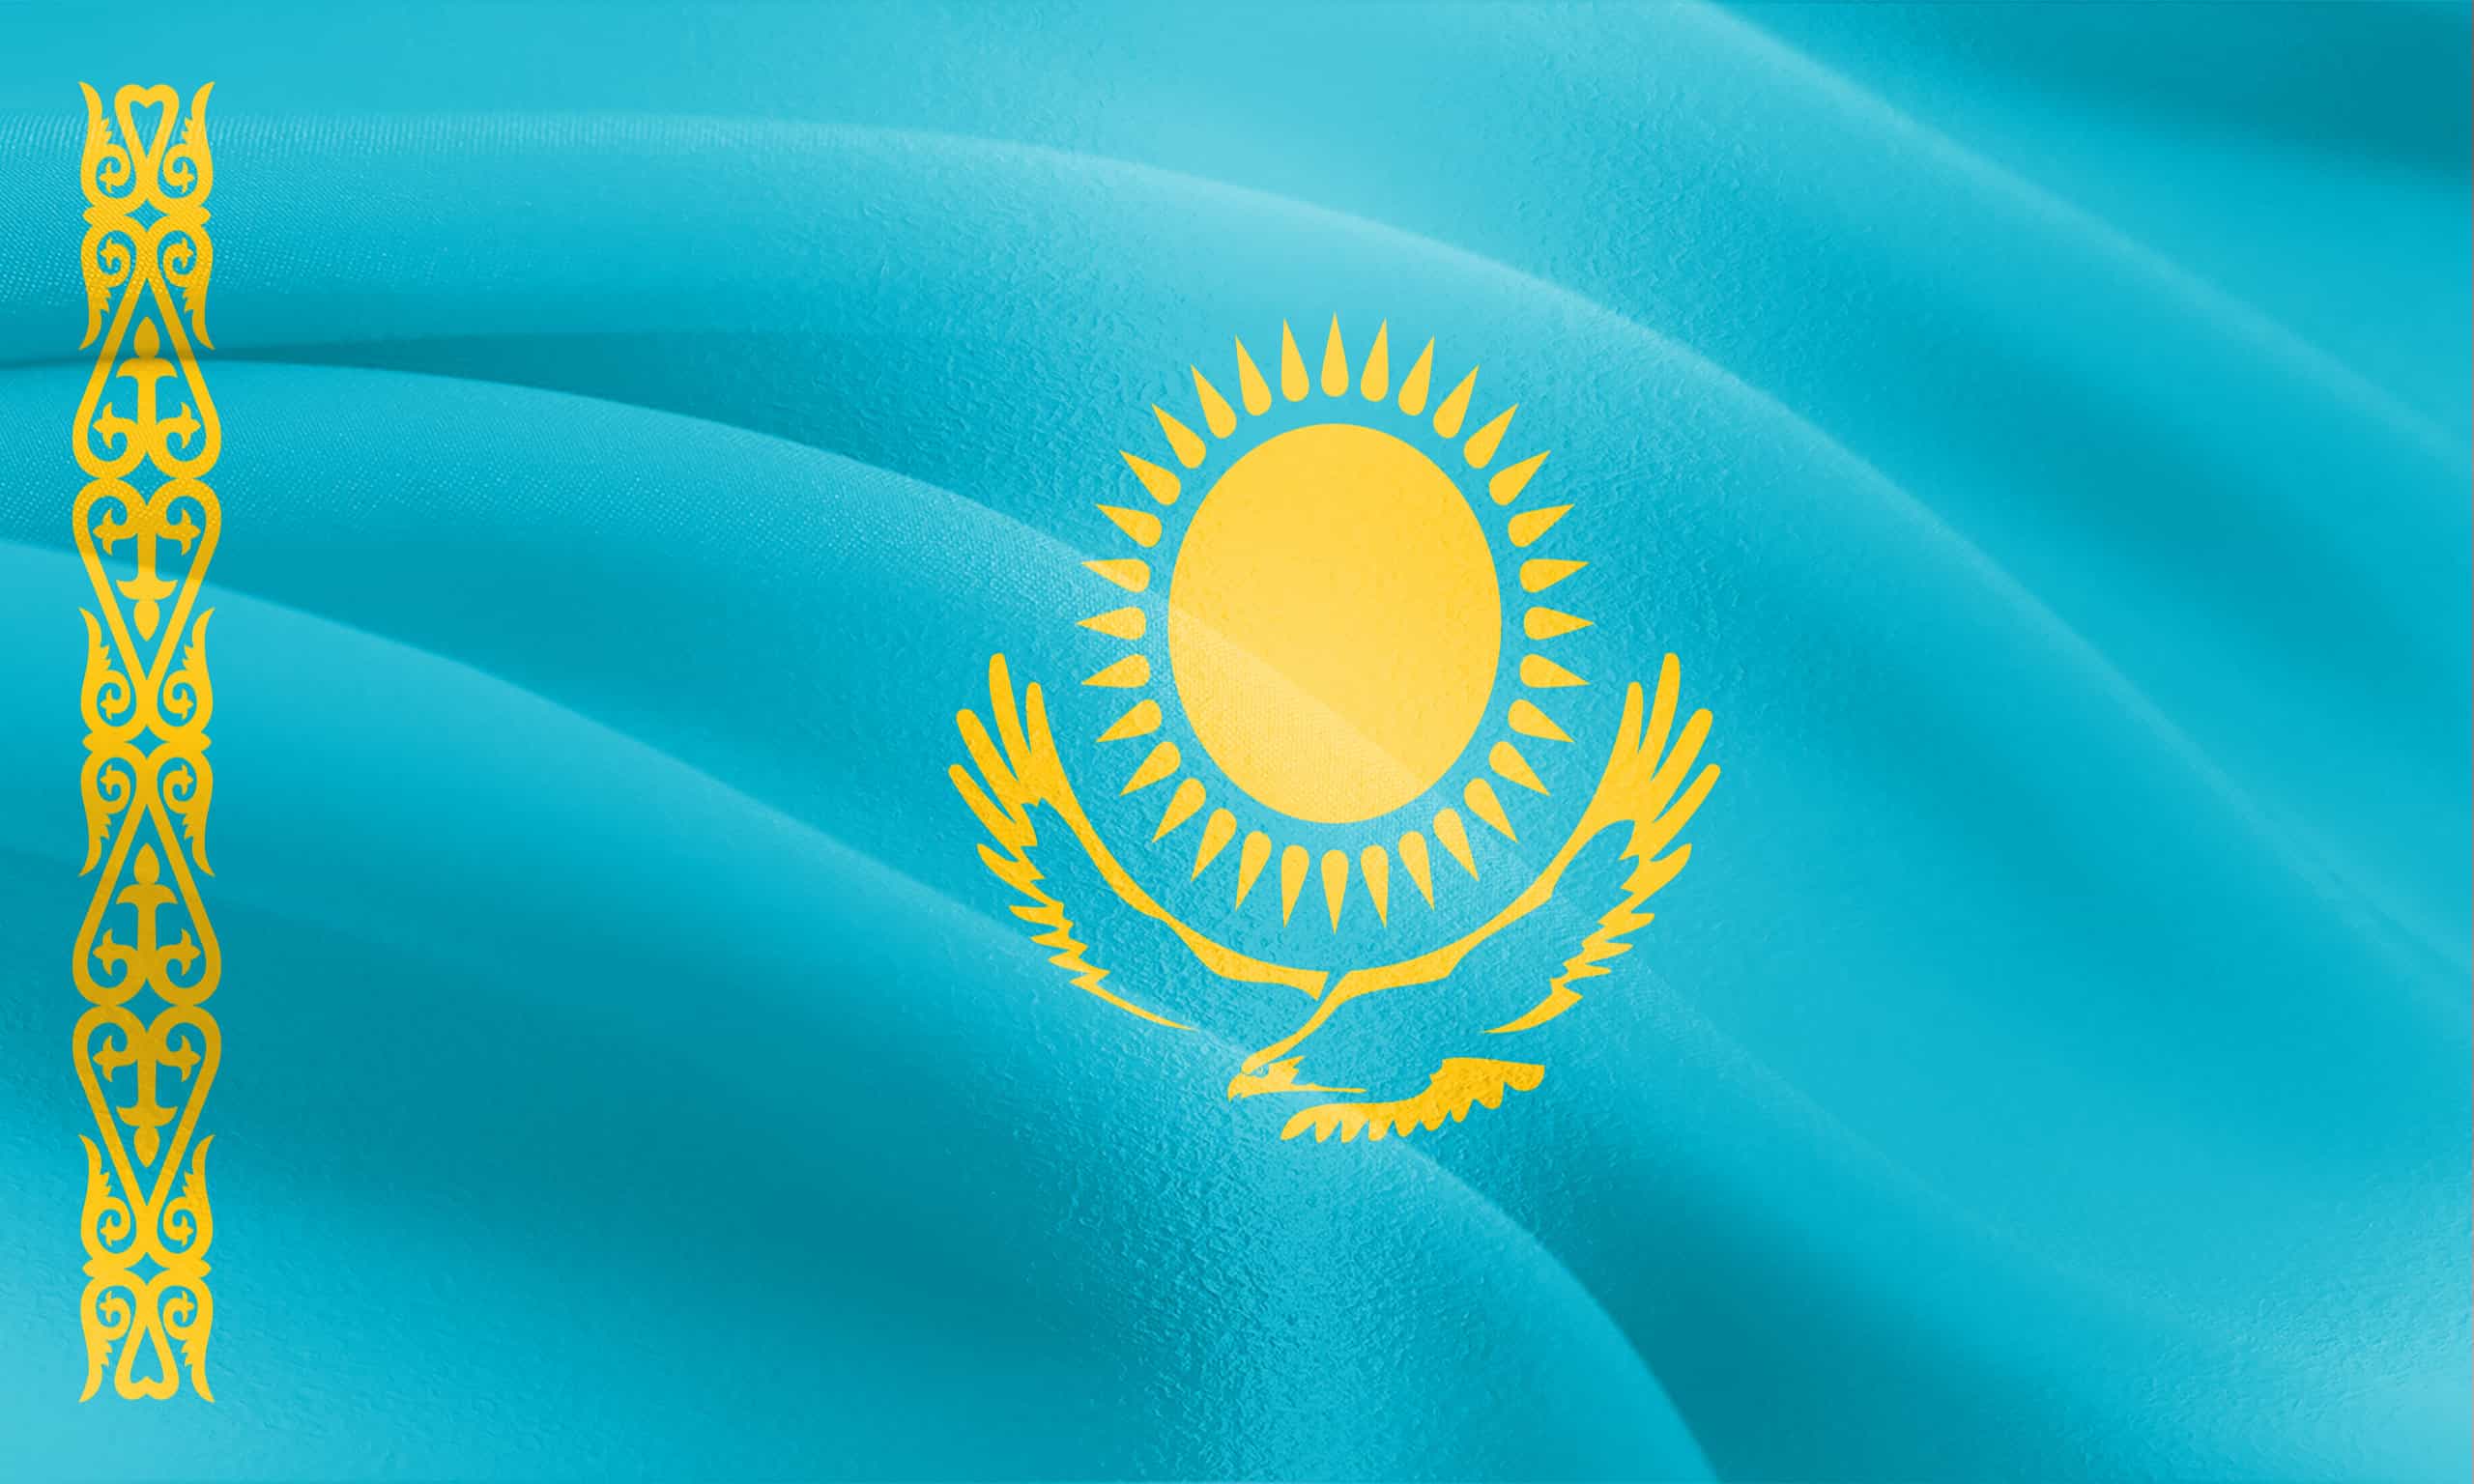 Textured Flag of Kazakhstan ideal for backdrops